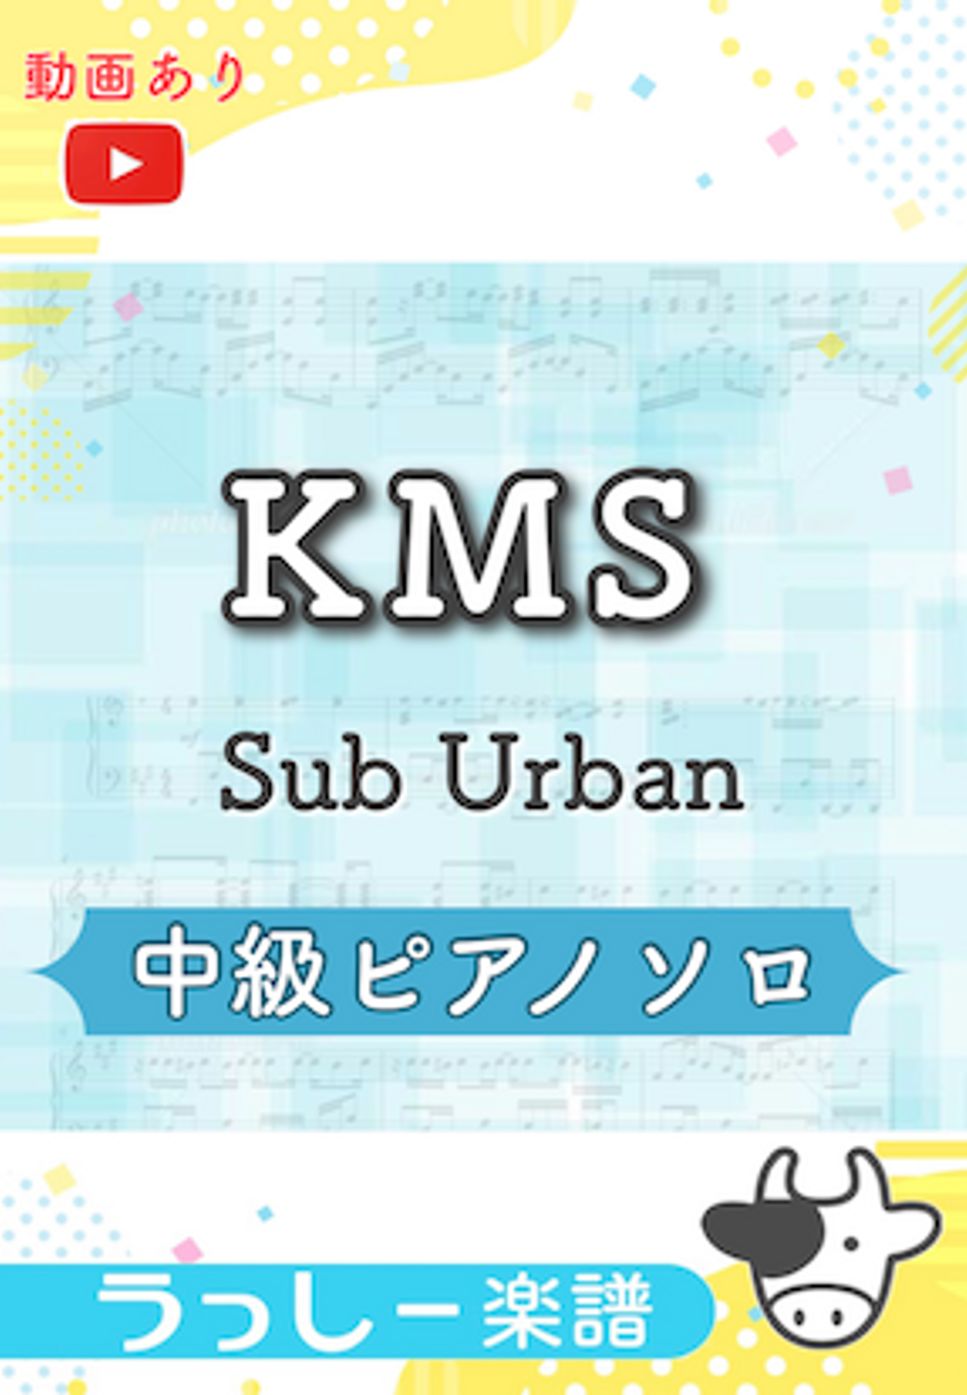 Sub Urban - KMS by 牛武奏人